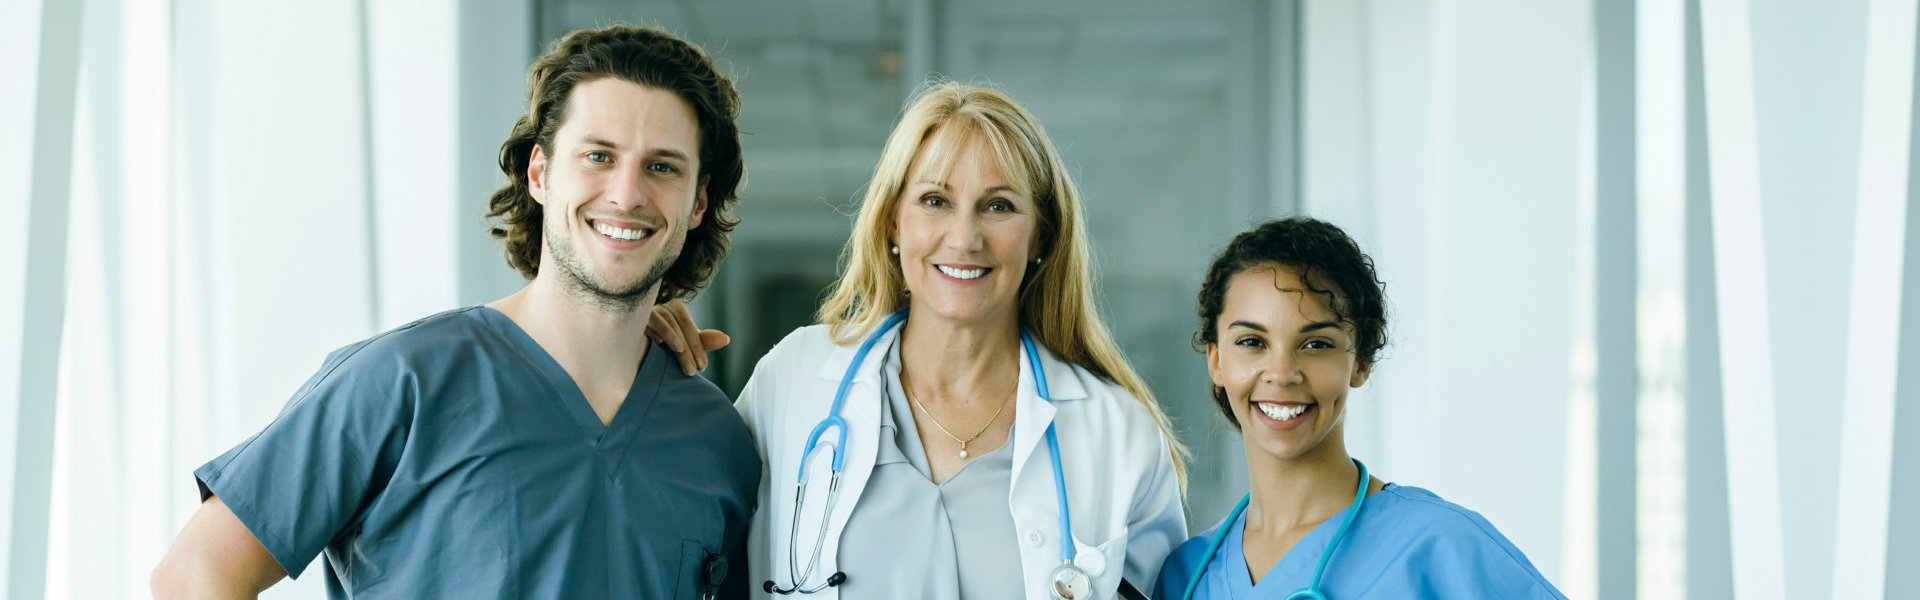 three medical professionals smiling